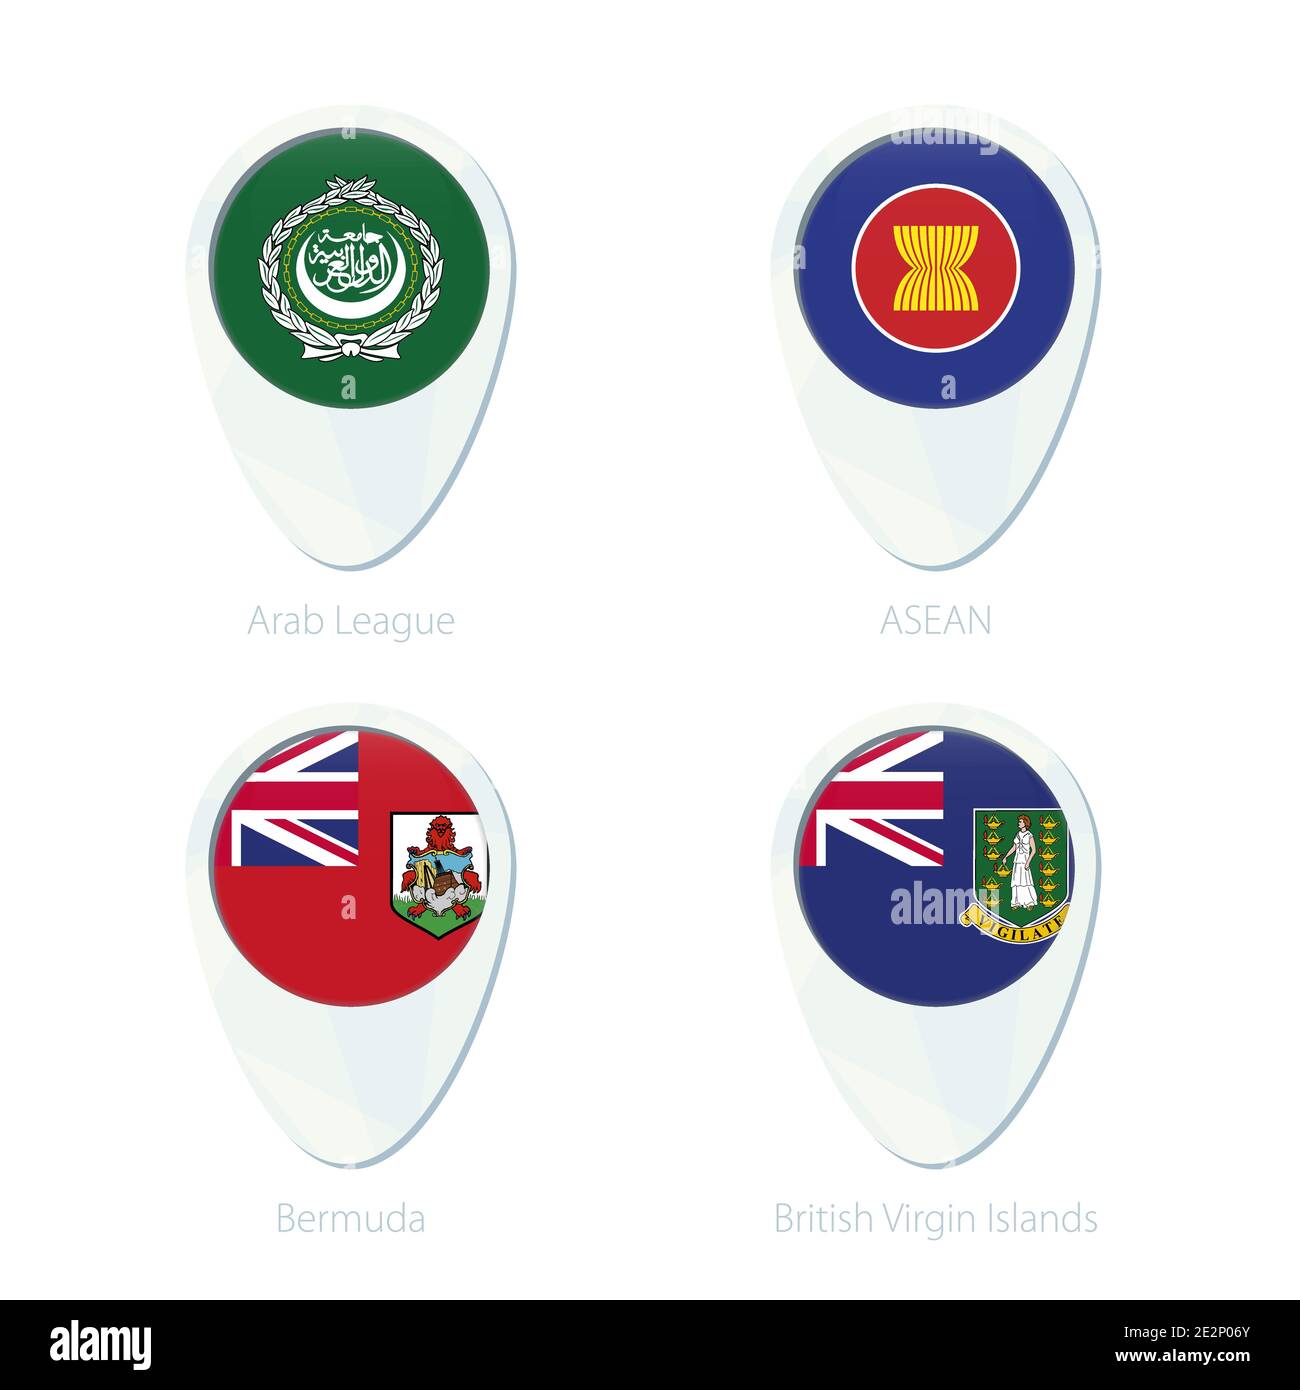 Arab League, ASEAN, Bermuda, British Virgin Islands flag location map pin icon. Arab League Flag, ASEAN Flag, Bermuda Flag, British Virgin Islands Fla Stock Vector